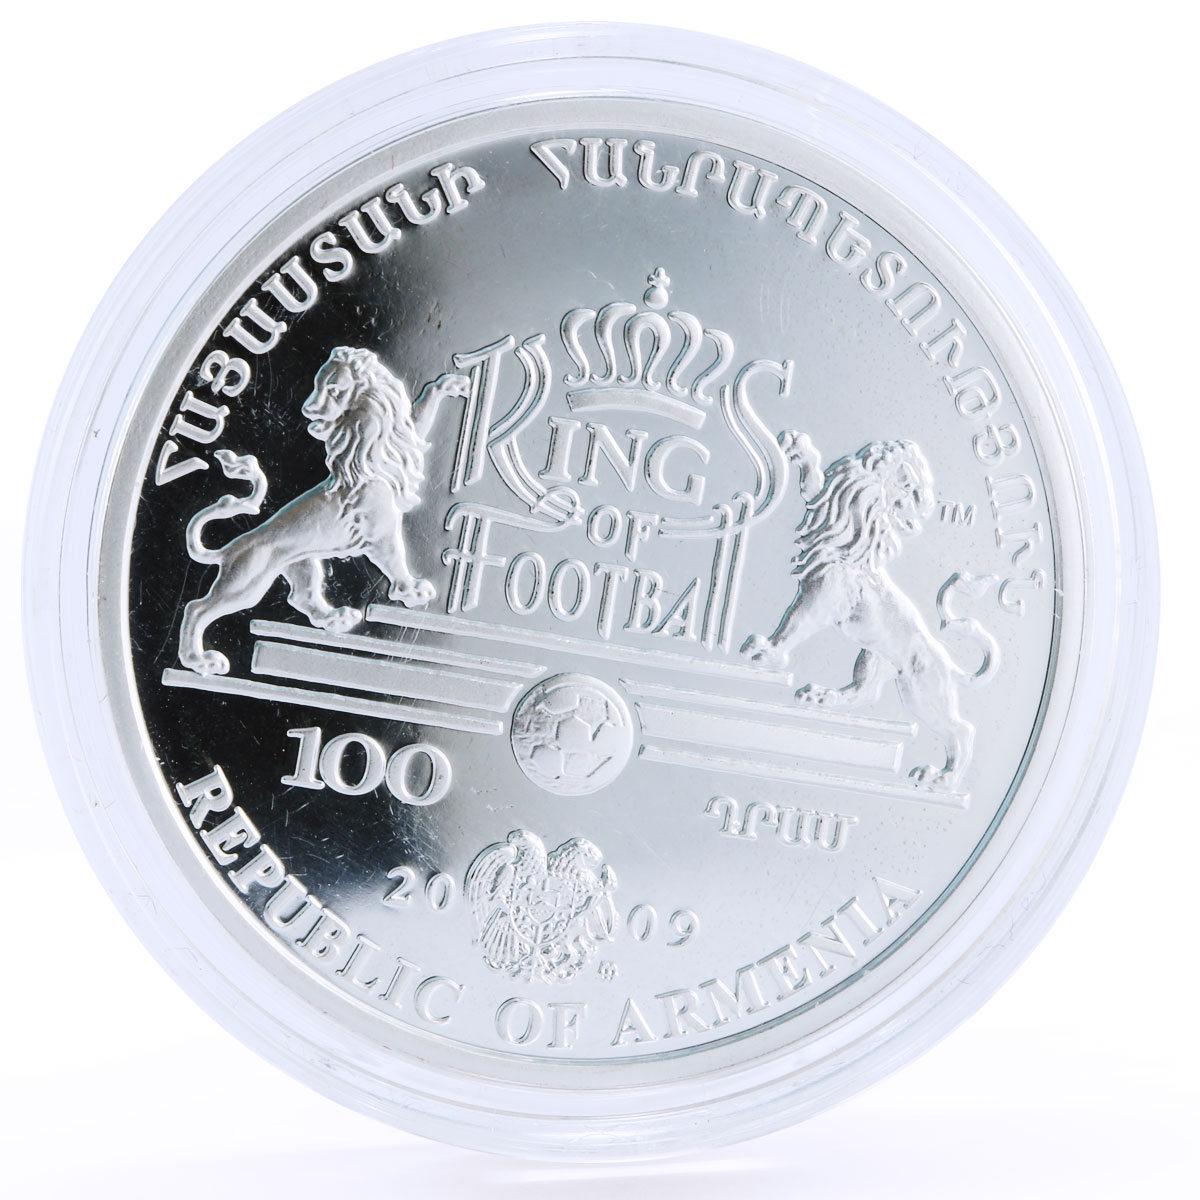 Armenia 100 dram Kings of Football Franz Beckenbauer colored silver coin 2009